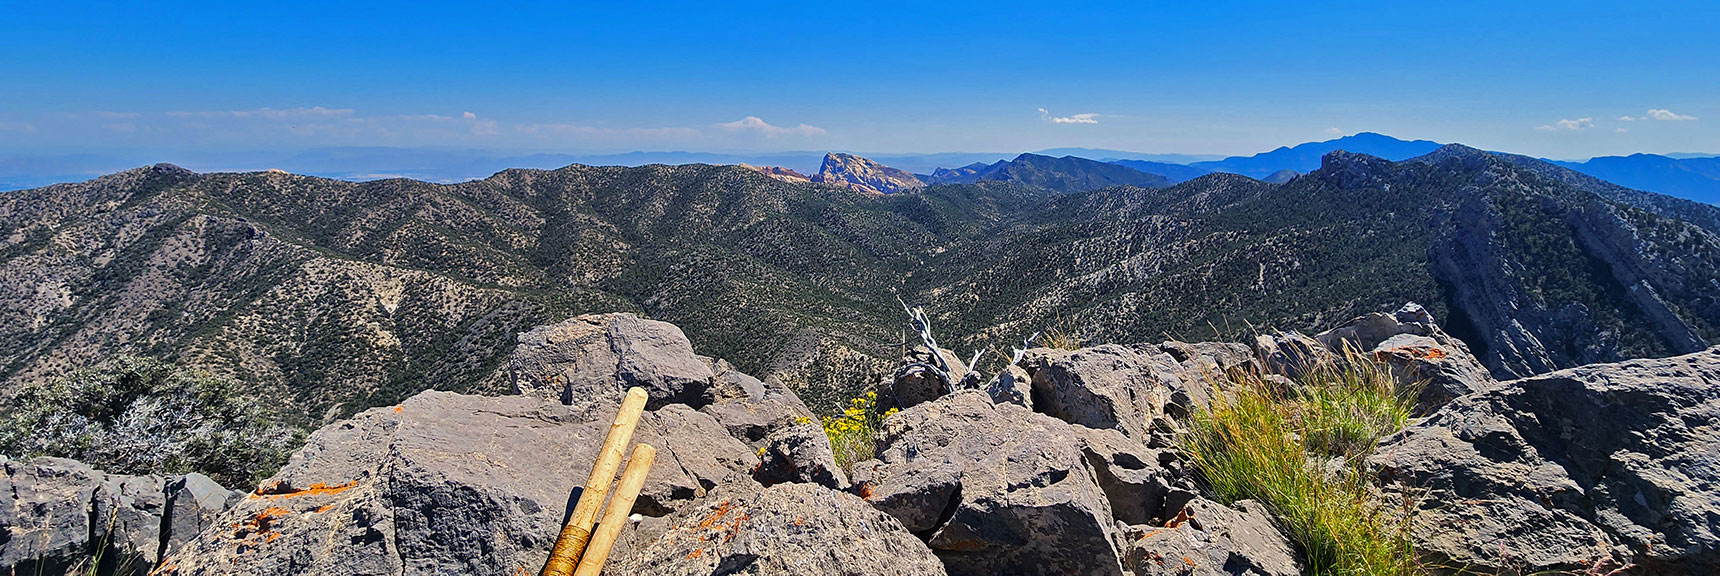 That Cross-Over Ridge Lands on Rainbow Mts. Ridgeline Above Juniper Peak. Mt. Wilson Visible.| Red Rock Summit | Lovell Canyon & Rainbow Mountain Wilderness, Nevada